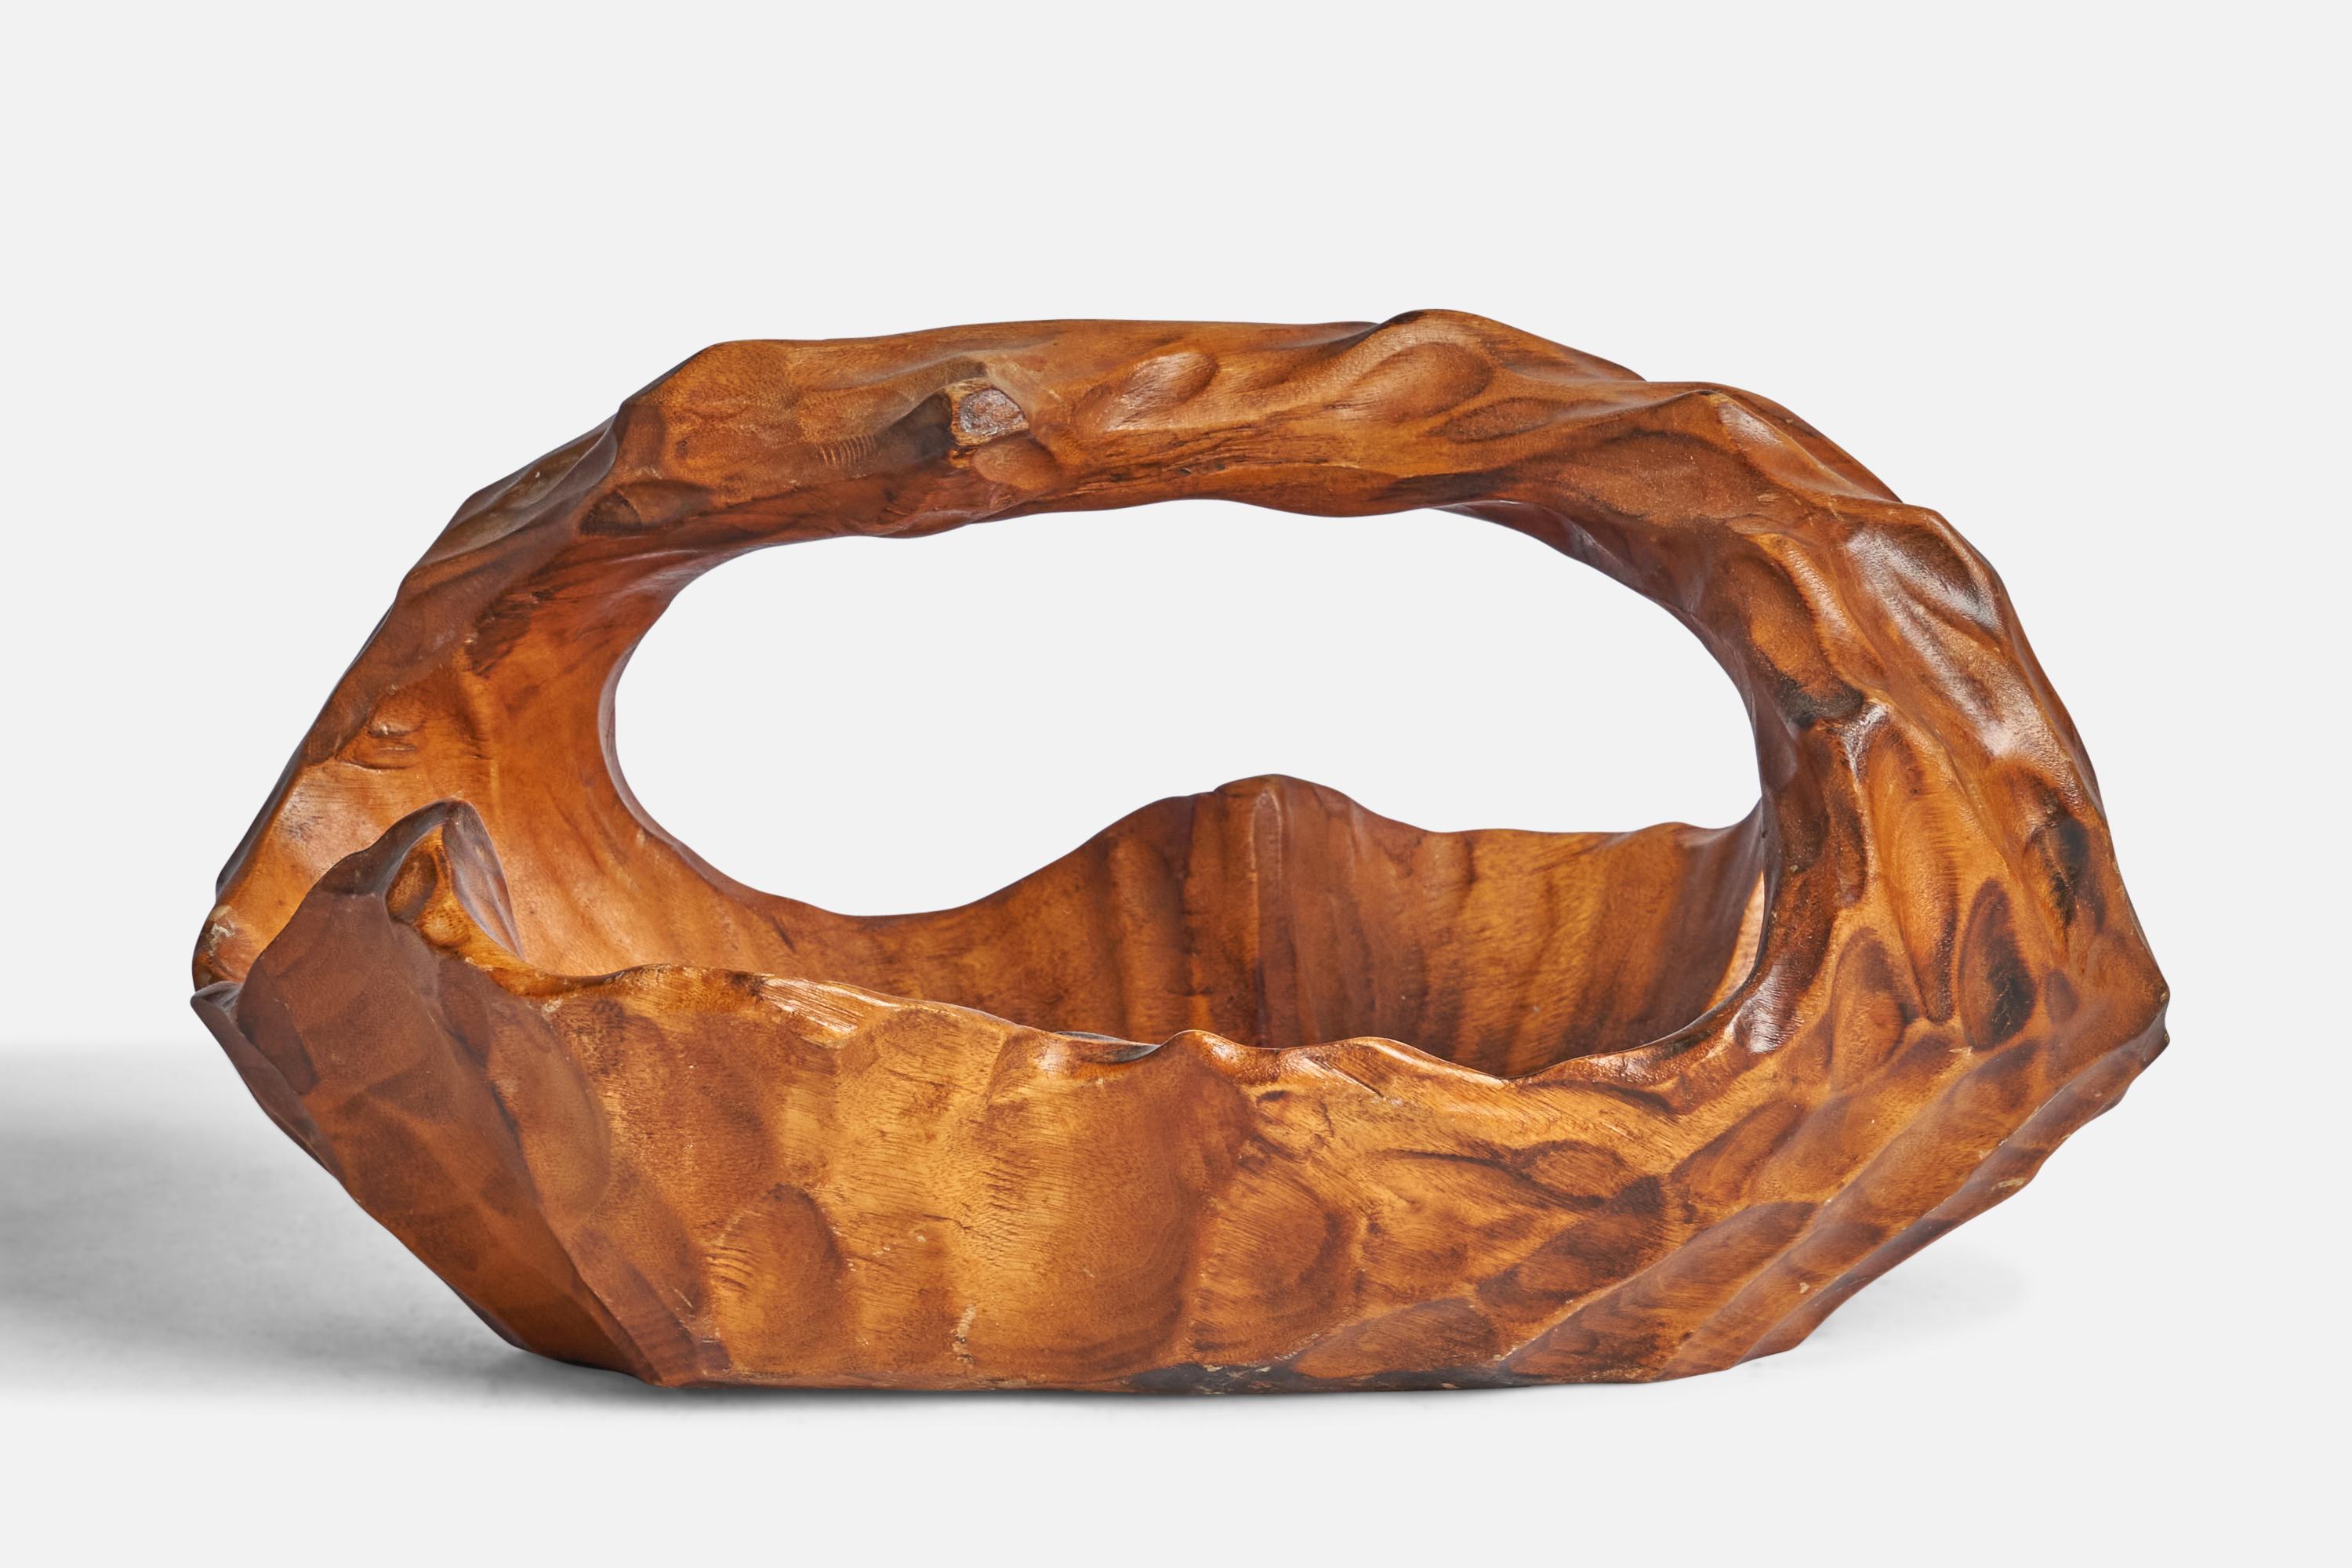 A carved burl wood bowl or basket designed and produced in Sweden, c. 1960s.